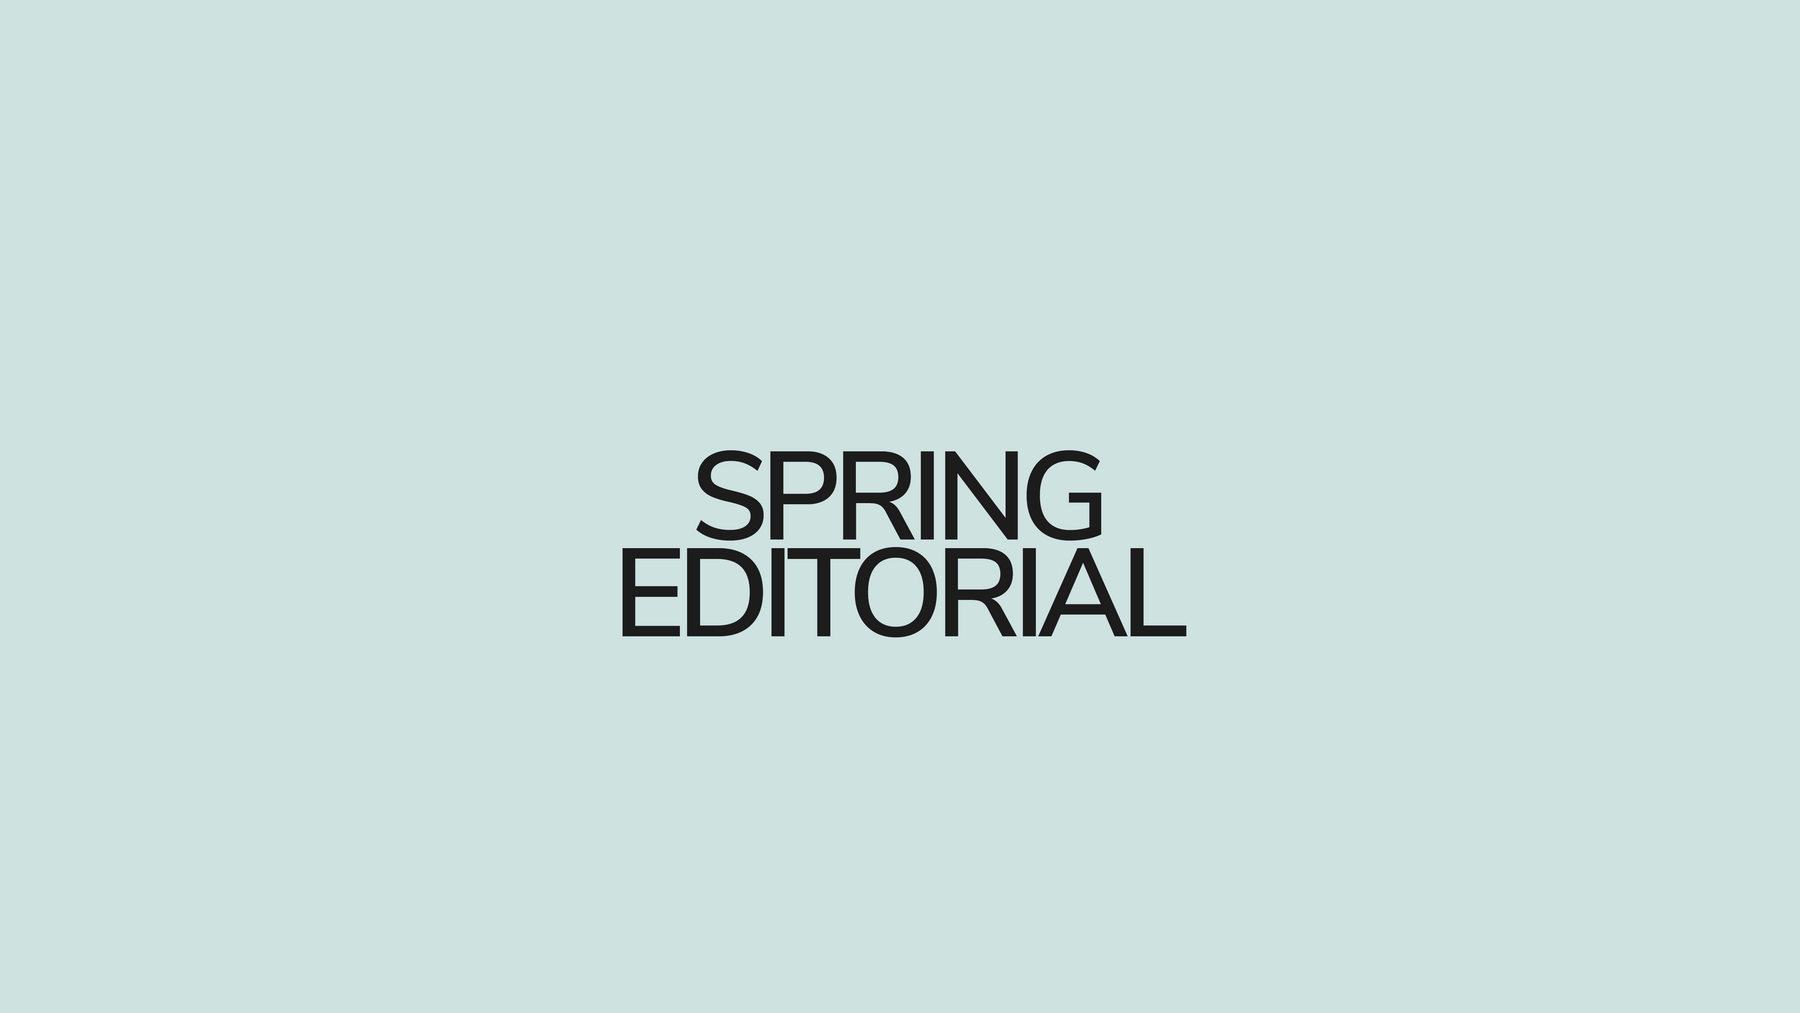 Spring Editorial: Novelty